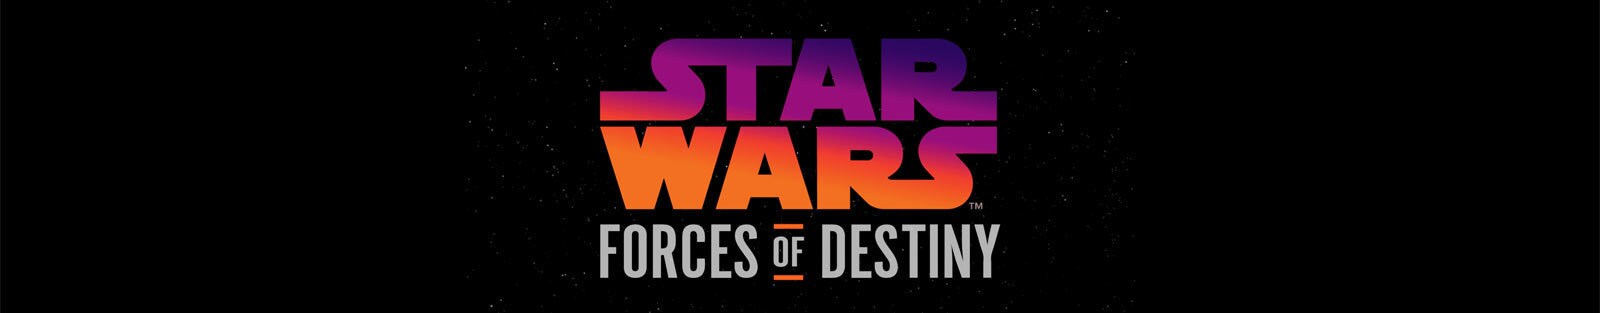 Star Wars Forces of Destiny 